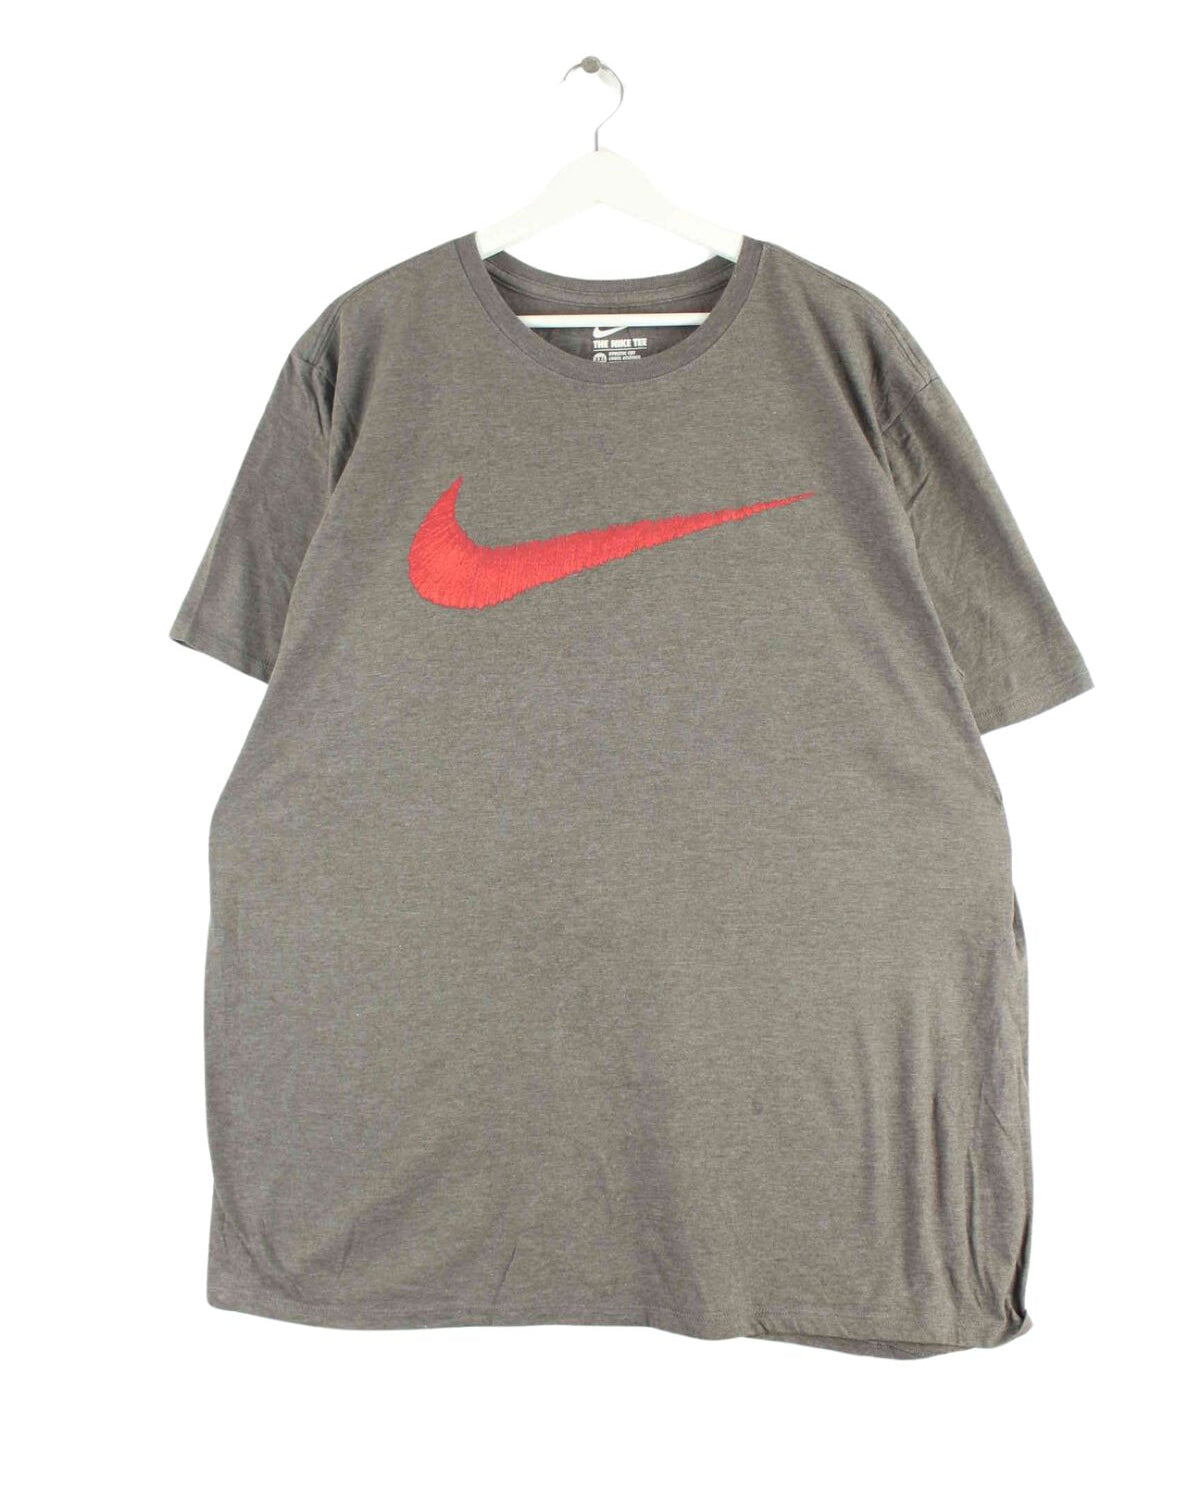 Nike Print T-Shirt Grau XXL (front image)